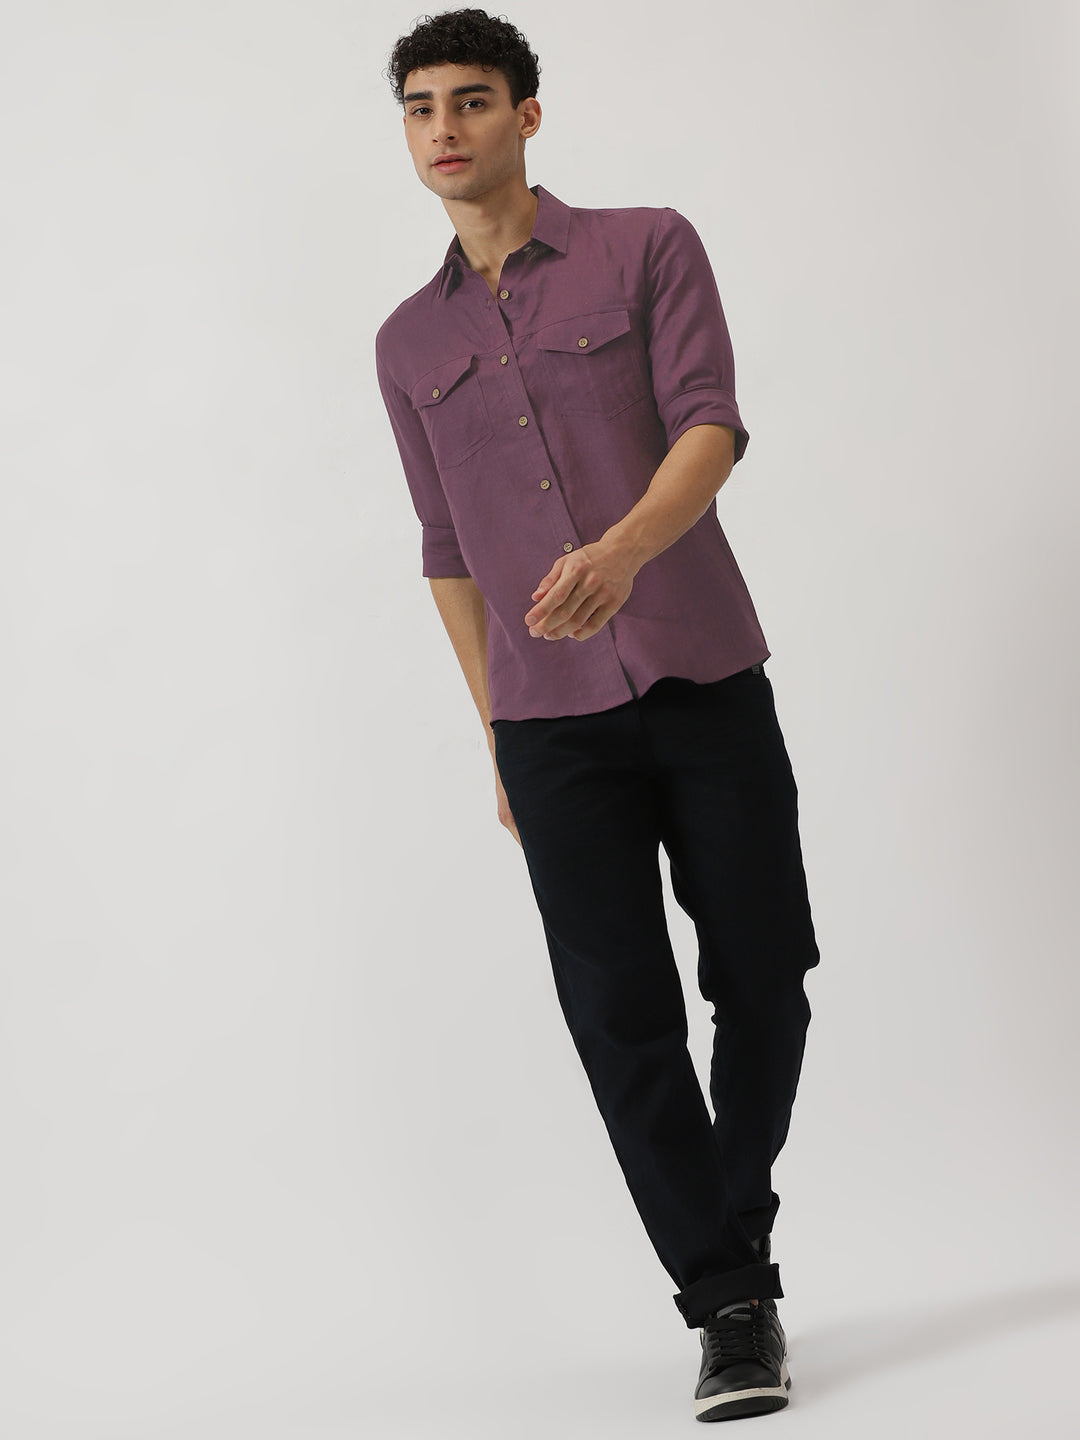 Thomas - Men's Pure Linen Double Pocket Full Sleeve Shirt - Berry Purple